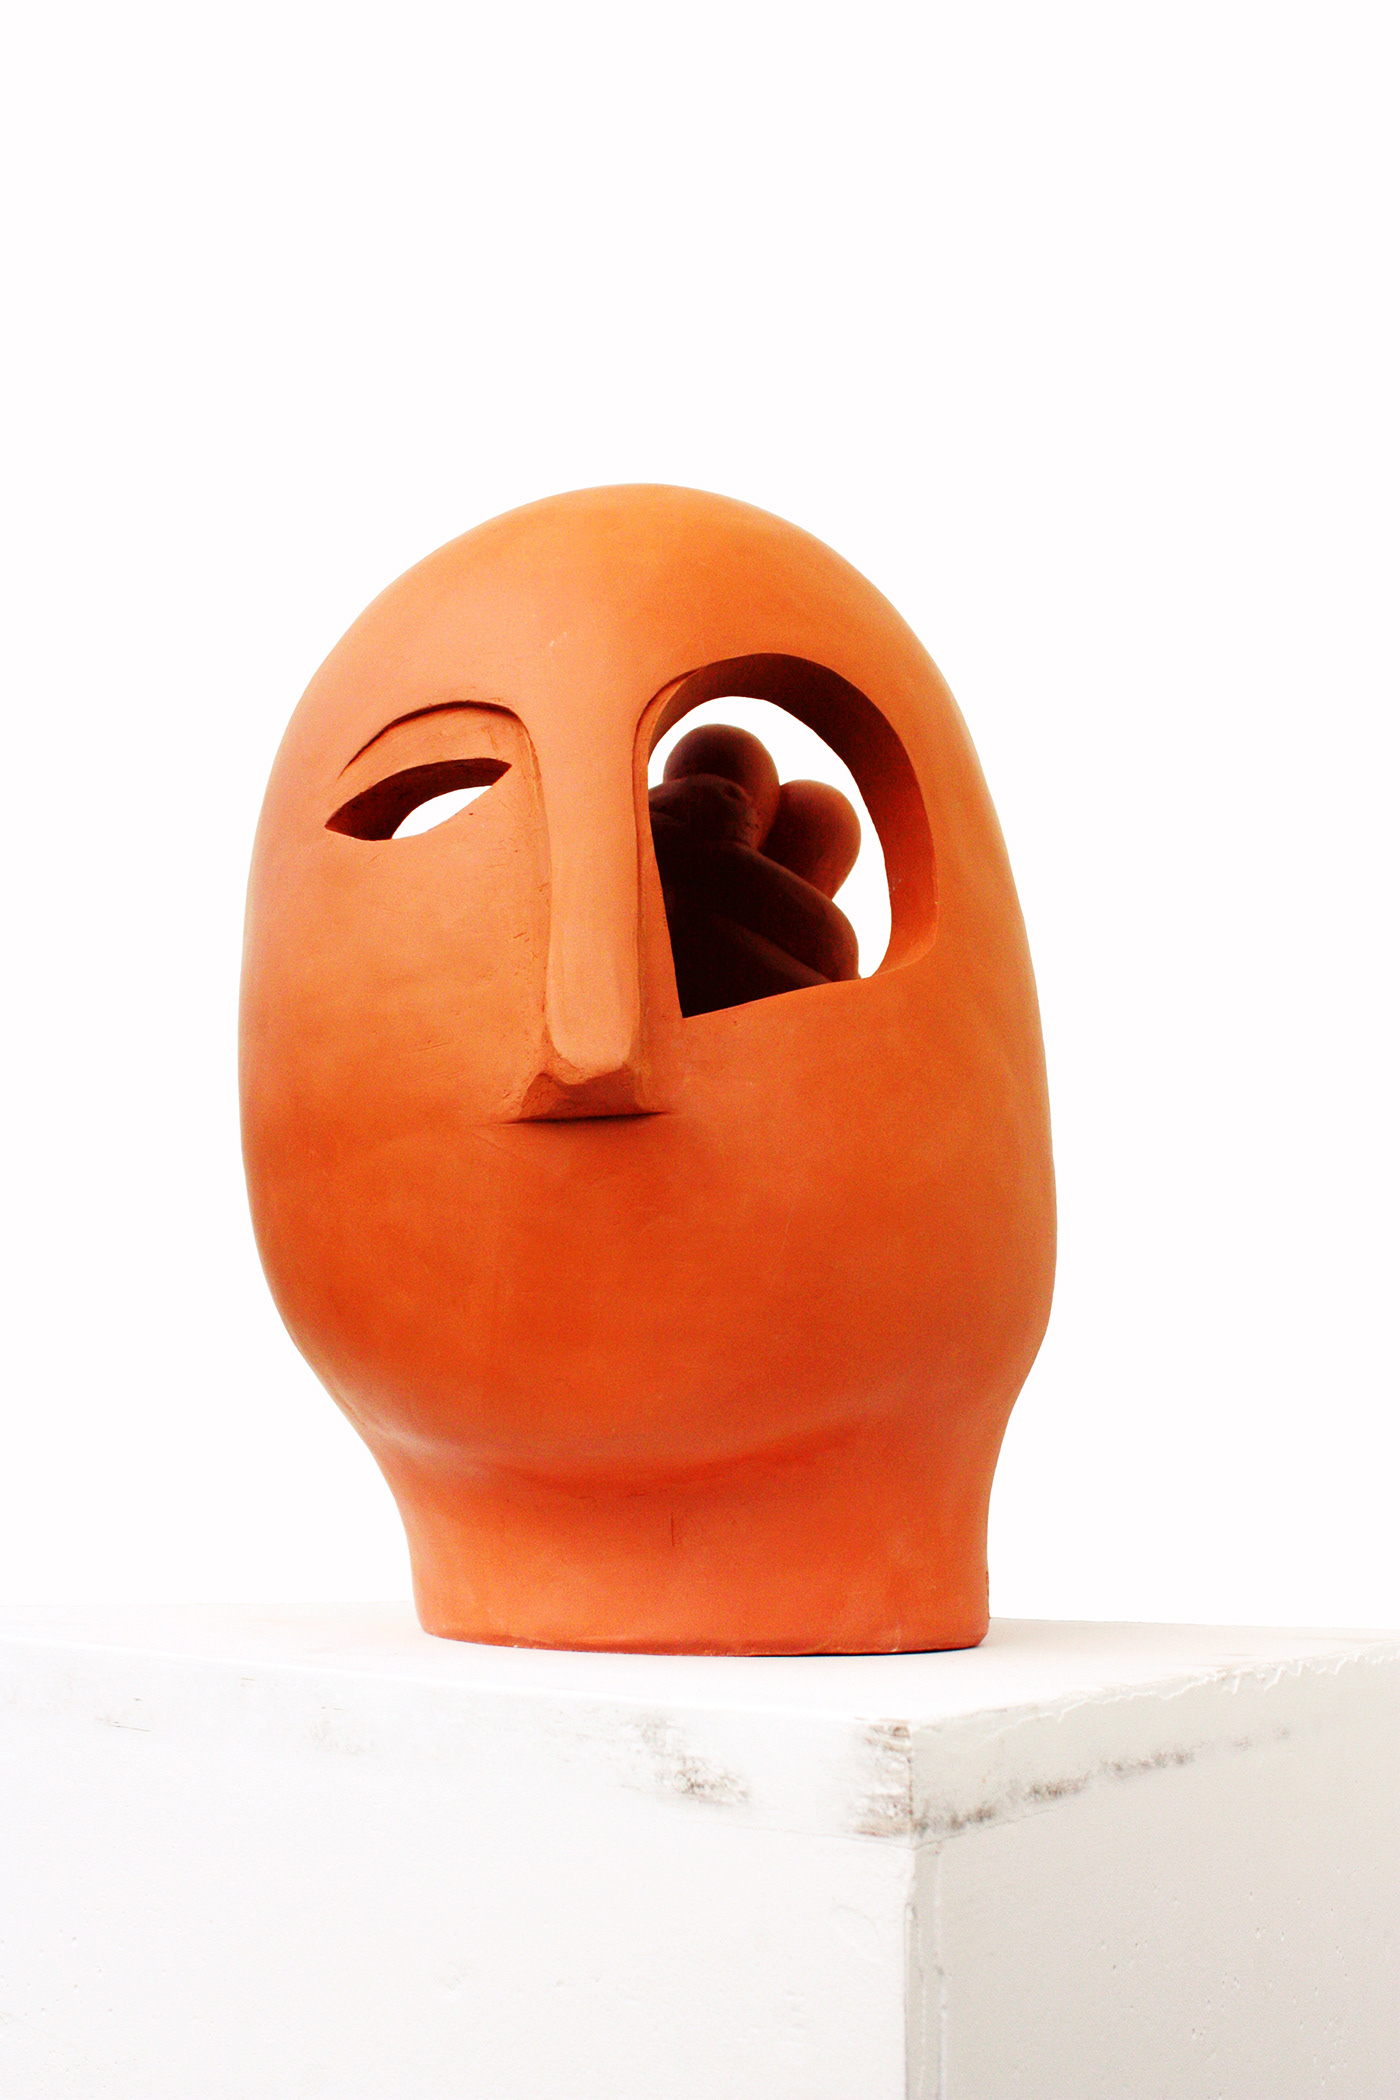 lovers ceramic art love clay head sculpture by Elisaveta Sivas for luxury interior design